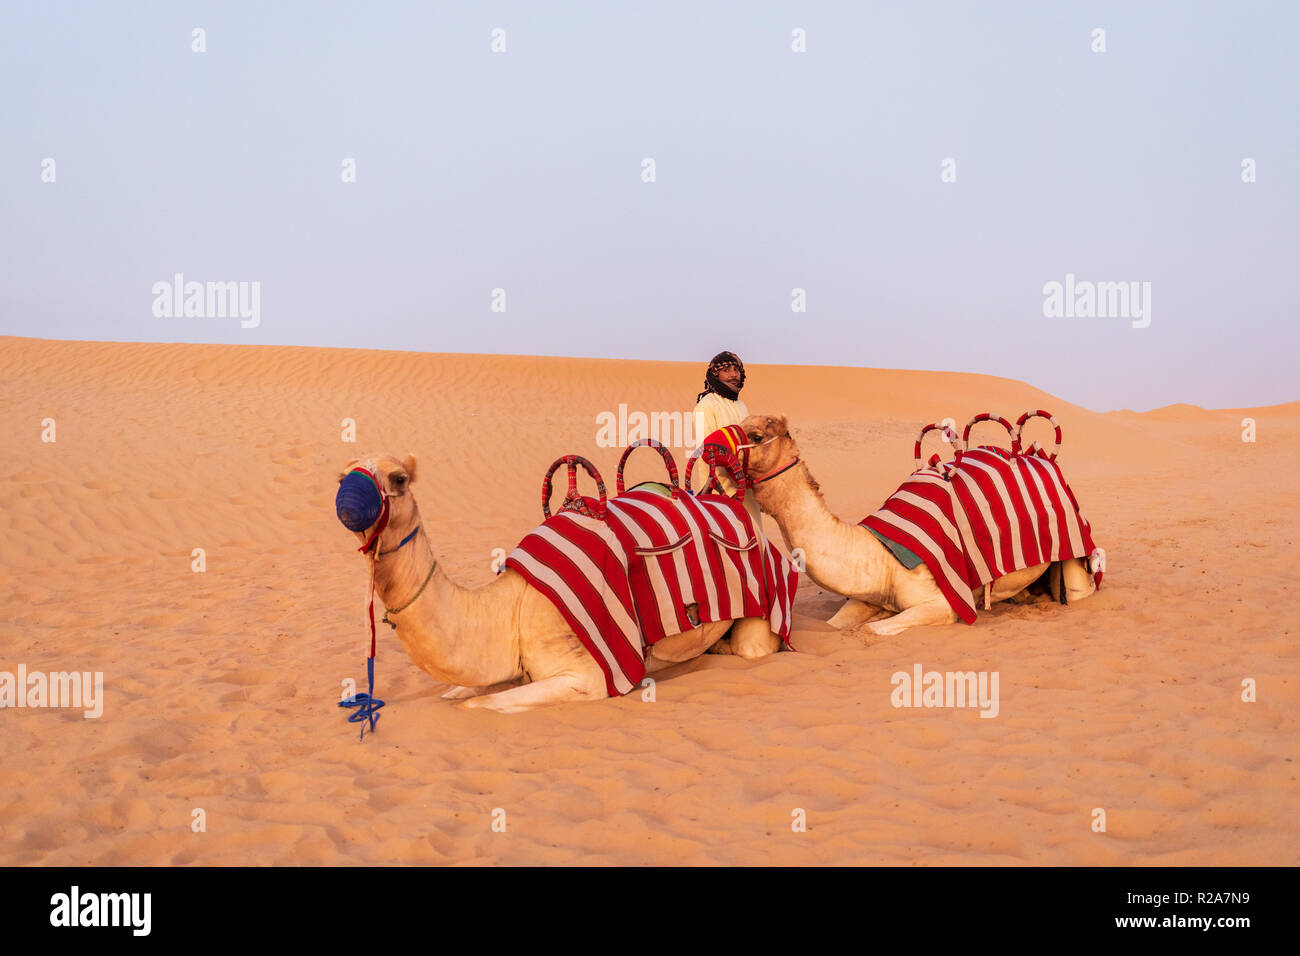 DUBAI, EMIRATOS ÁRABES UNIDOS - Noviembre 09, 2018: La caravana de camellos con árabe hombres esperando turistas para pasear por las dunas de arena en el desierto de Dubai. Foto de stock